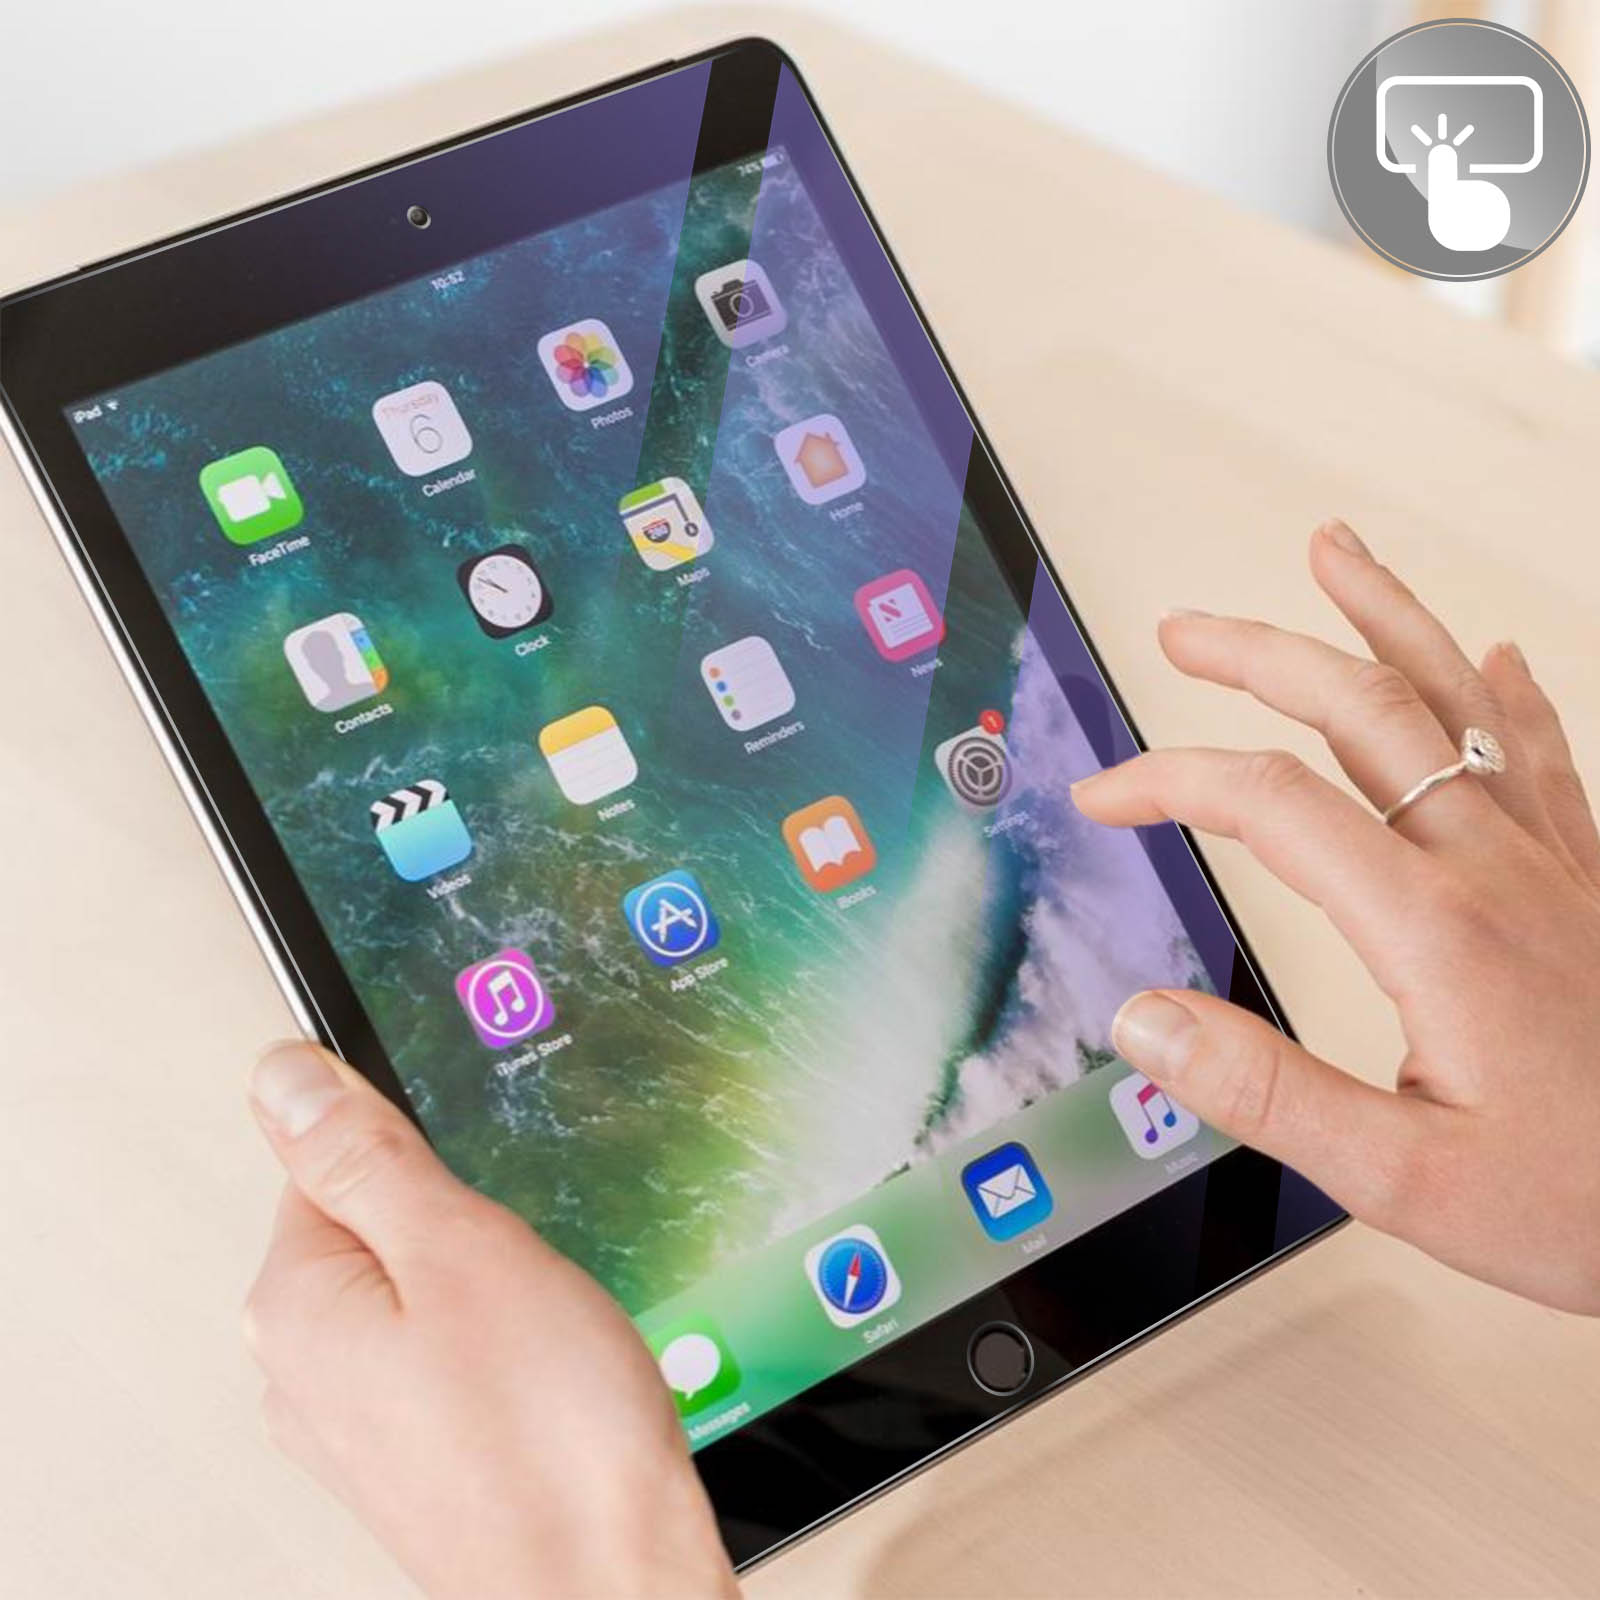 SOSav - Verre trempé compatible iPad Air / Air 2 / iPad 5 / iPad 6